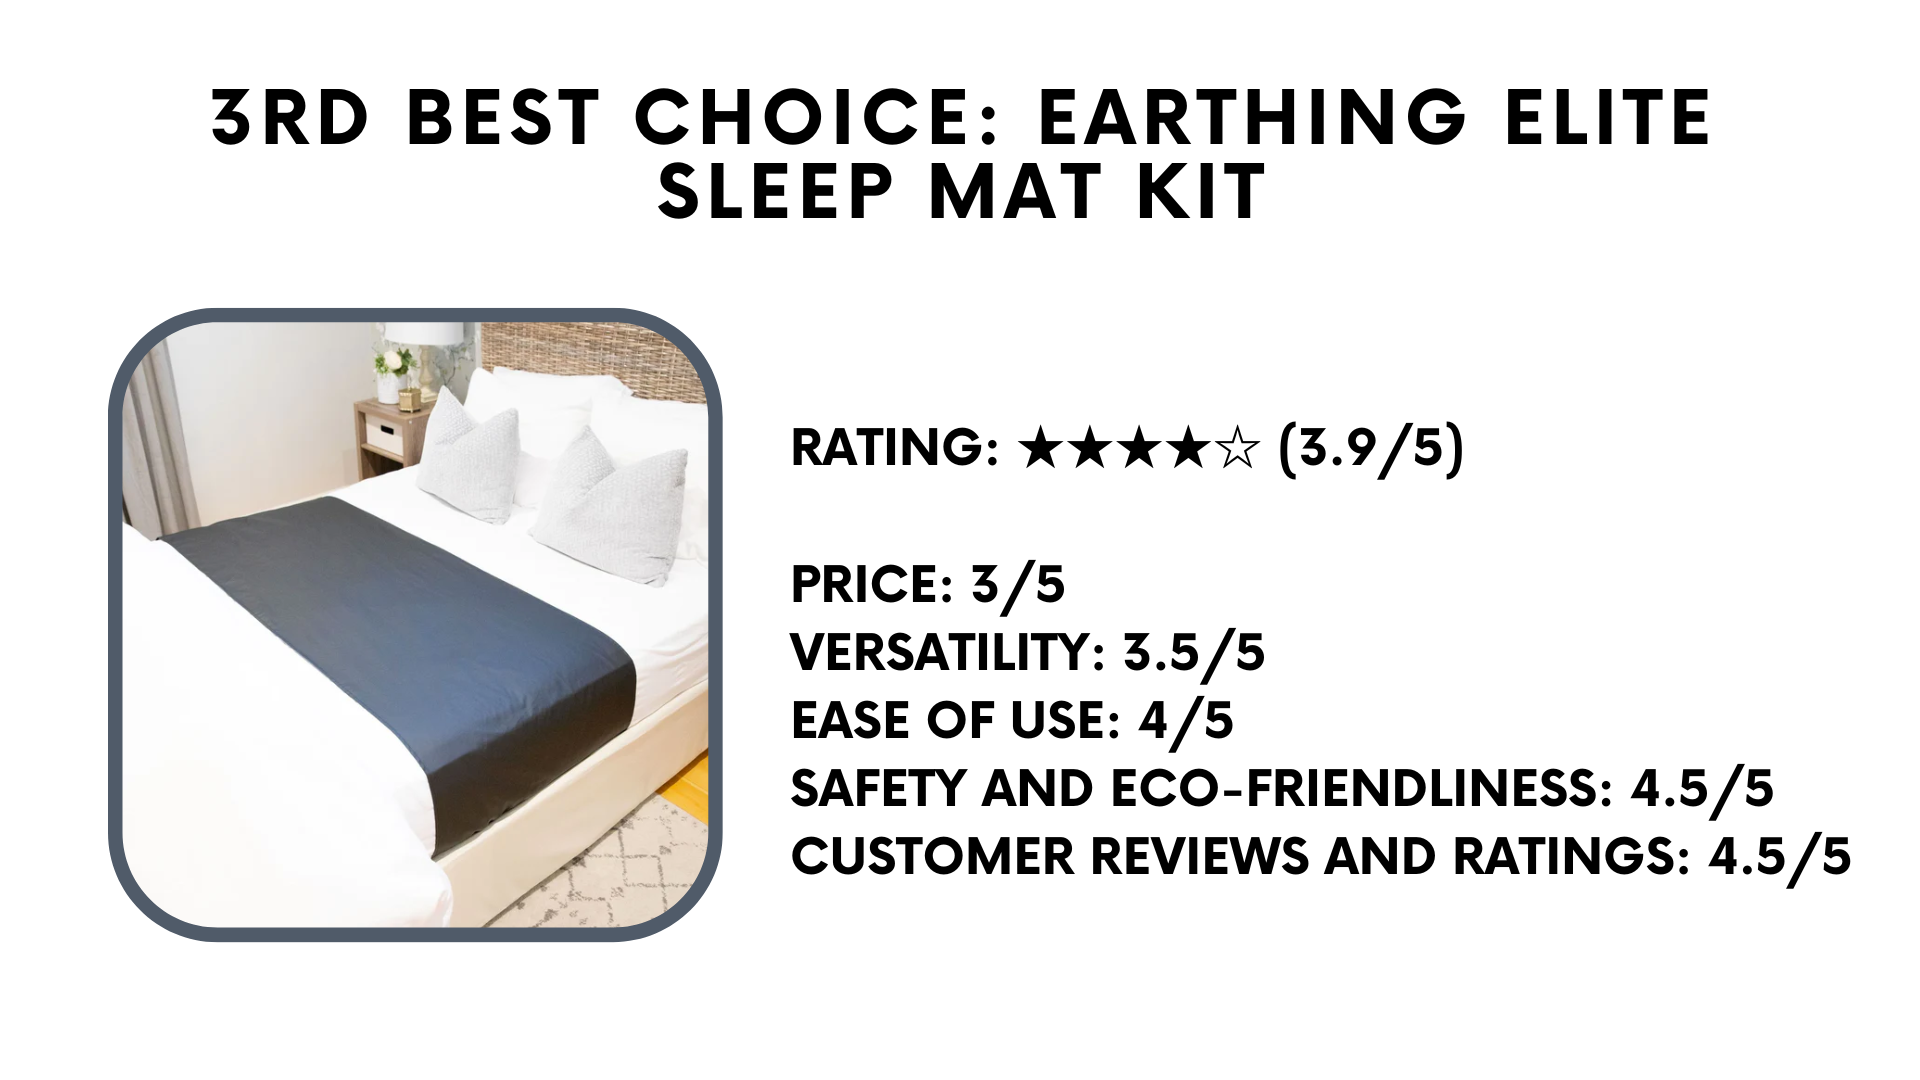 earthing elite sleep mat kit